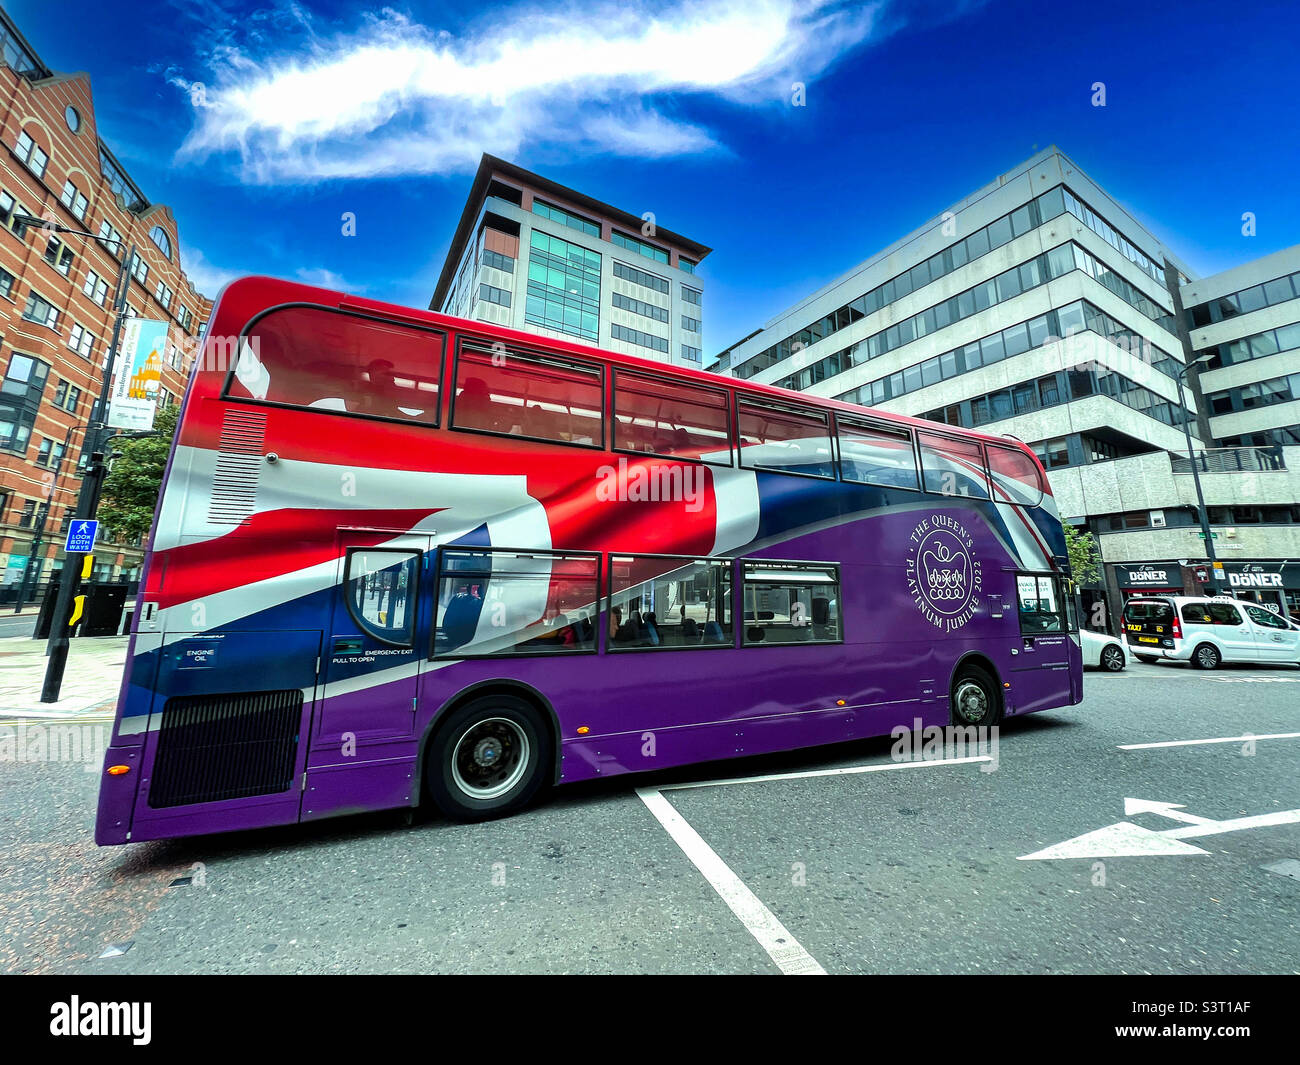 The Queens platinum jubilee bus in Leeds city centre Stock Photo